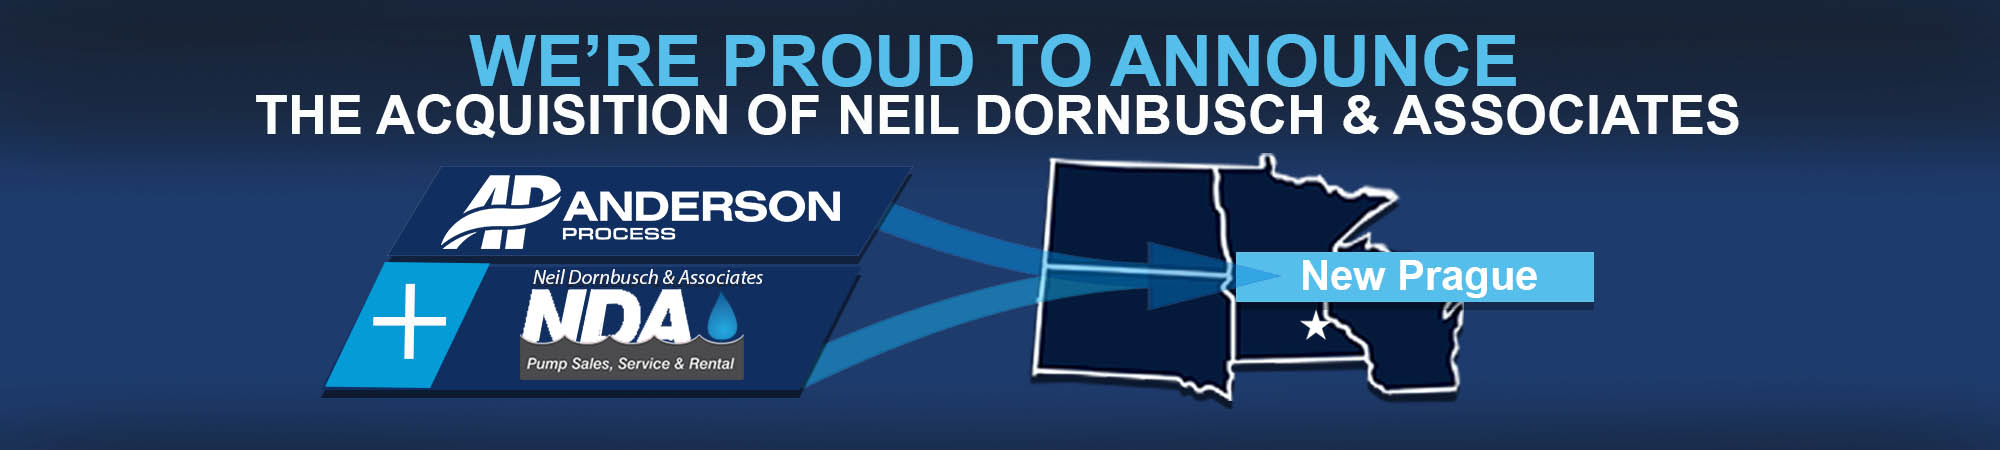 Anderson Process Acquires Neil Dornbusch & Associates